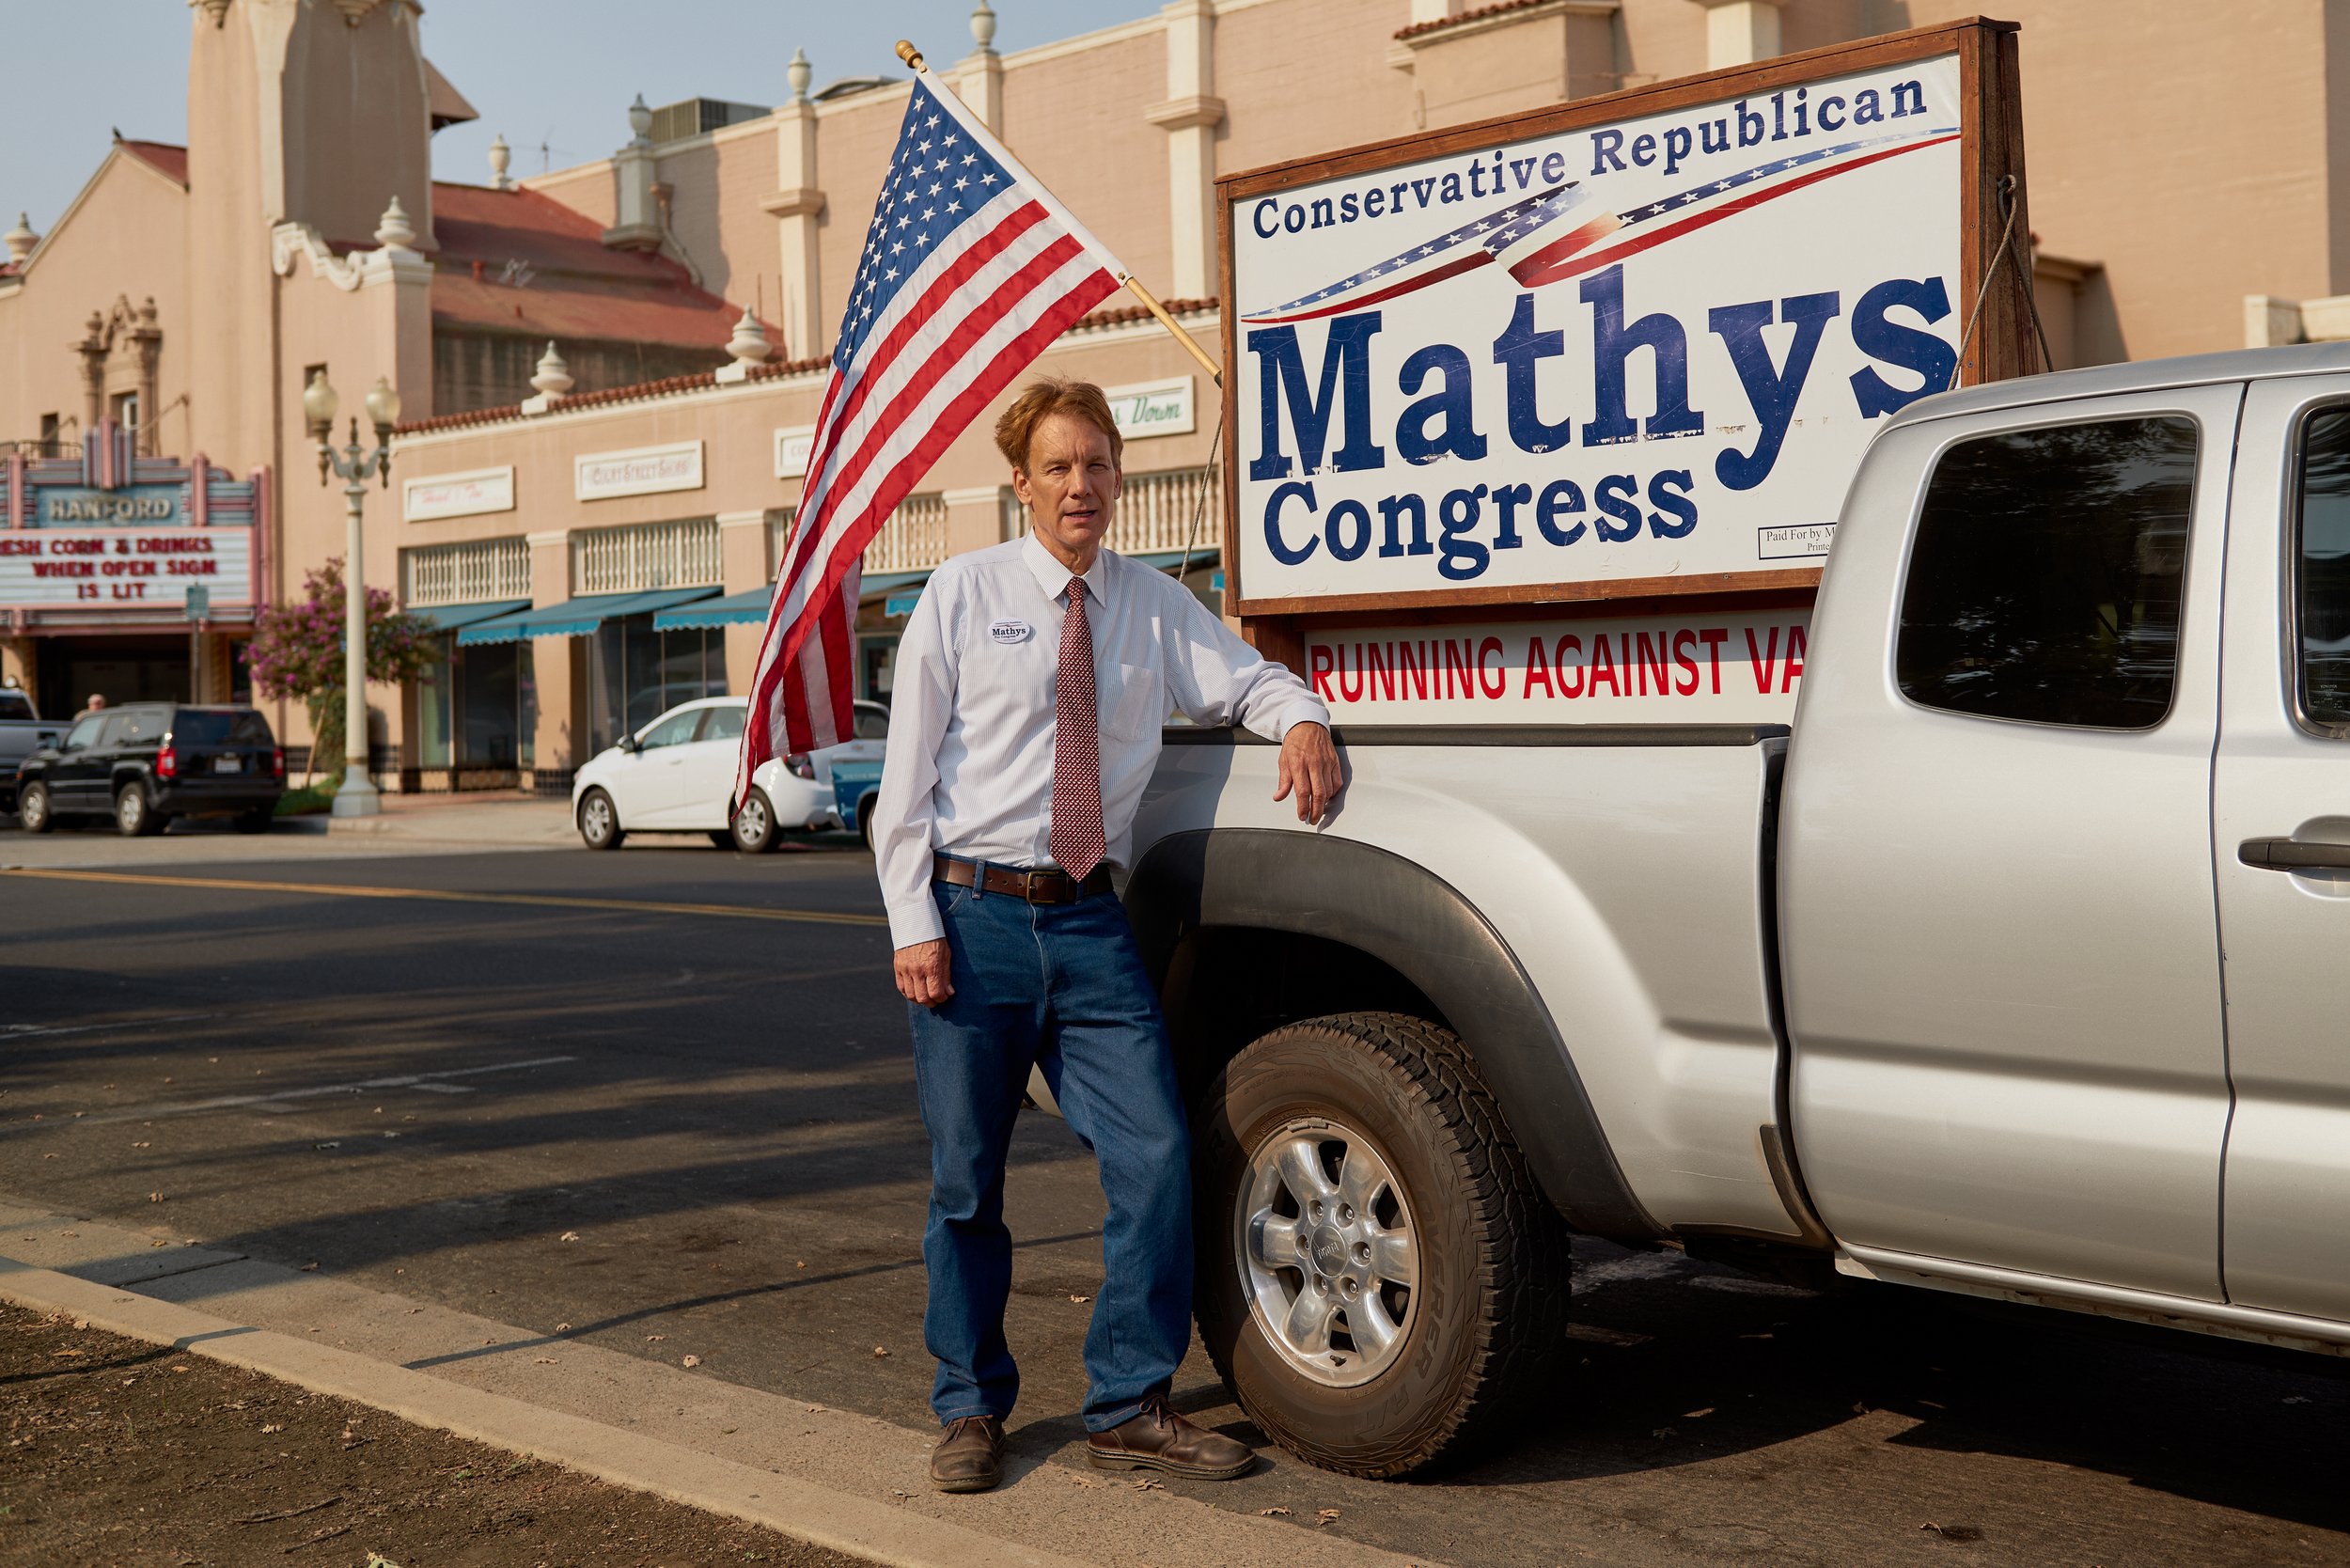 Chris Mathys, a Republican running against Rep. David Valadao. 